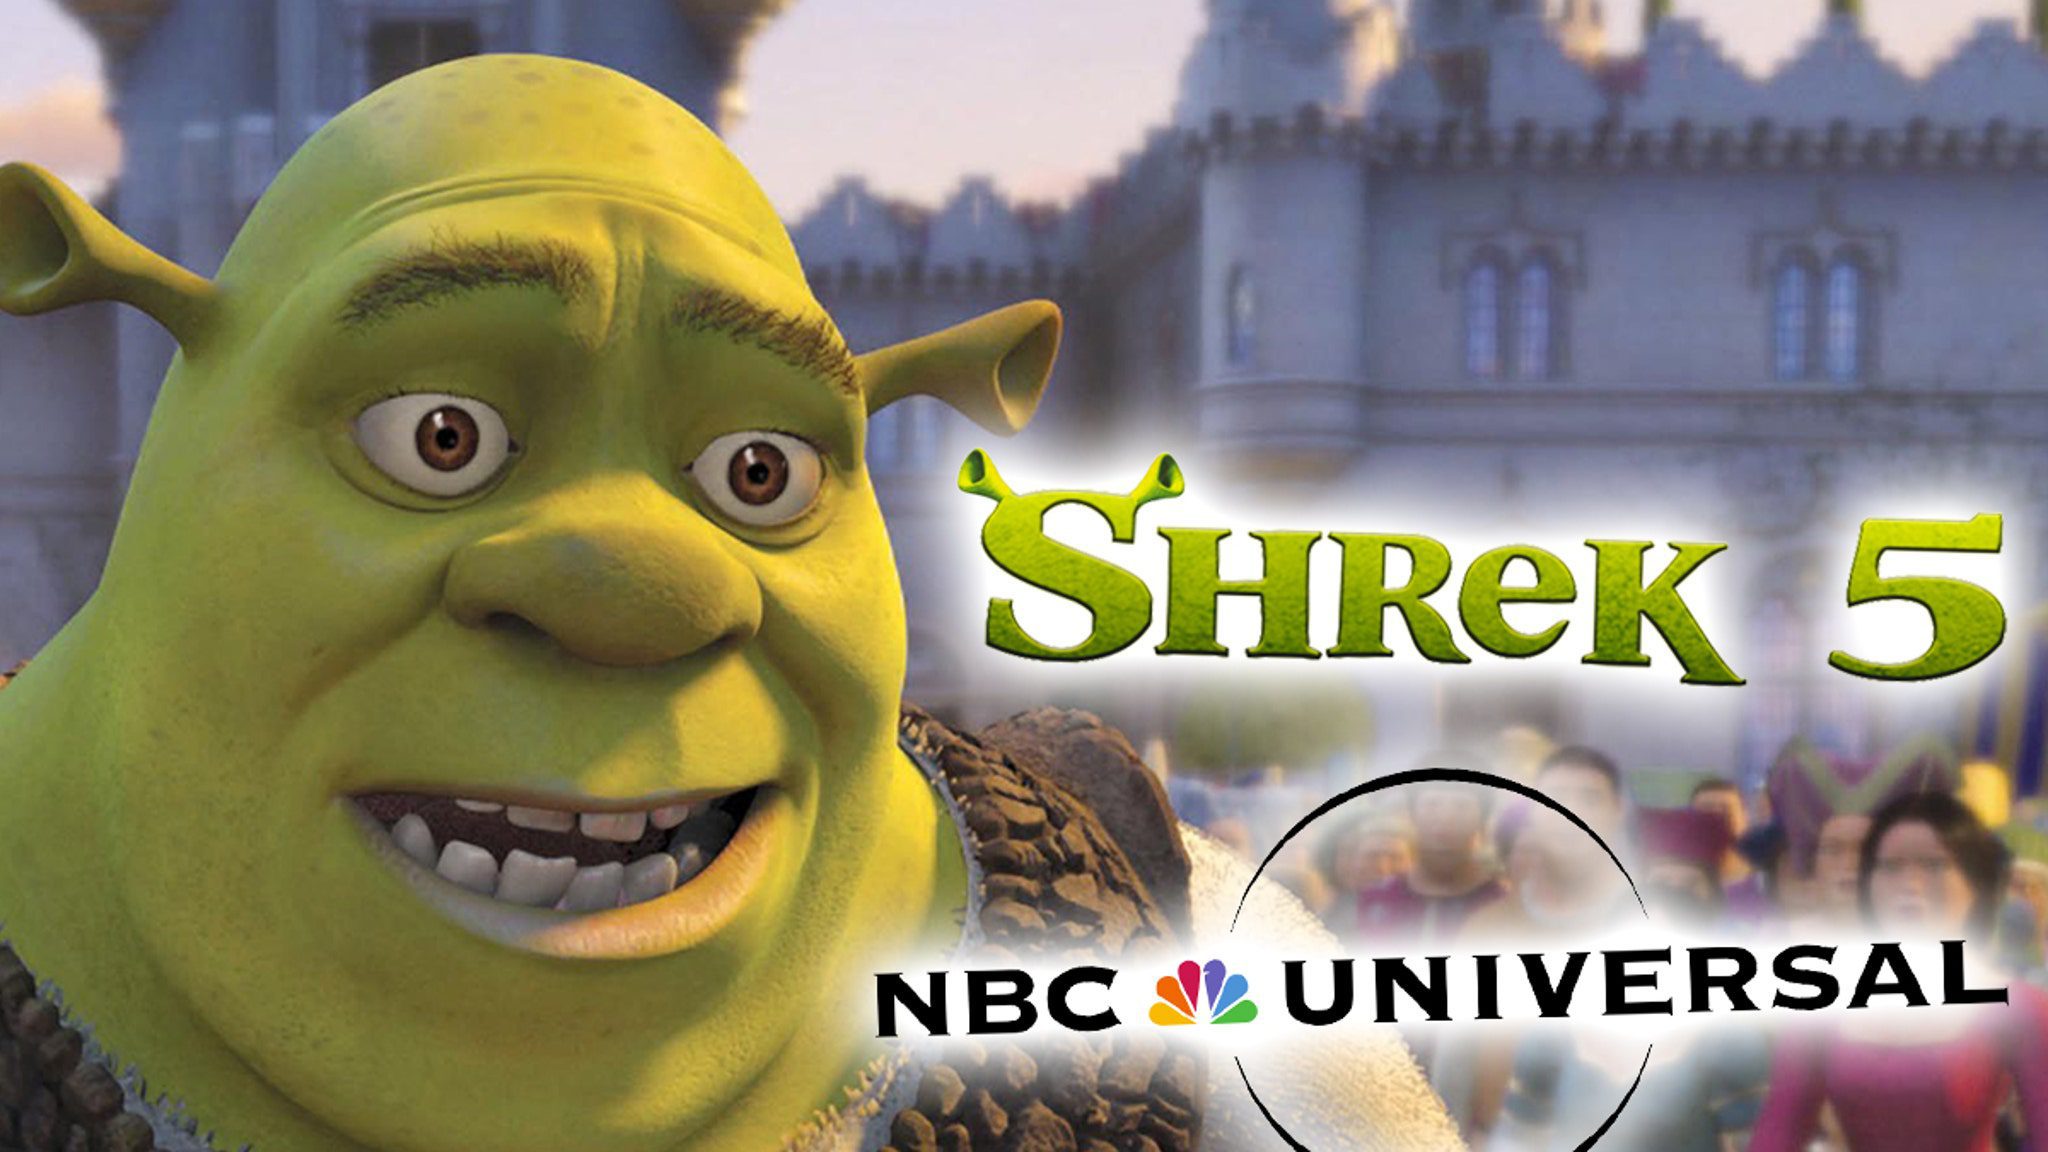 Accidental LinkedIn Leak Hints at Shrek 5 Release: Fact or Sophisticated Internet Prank?